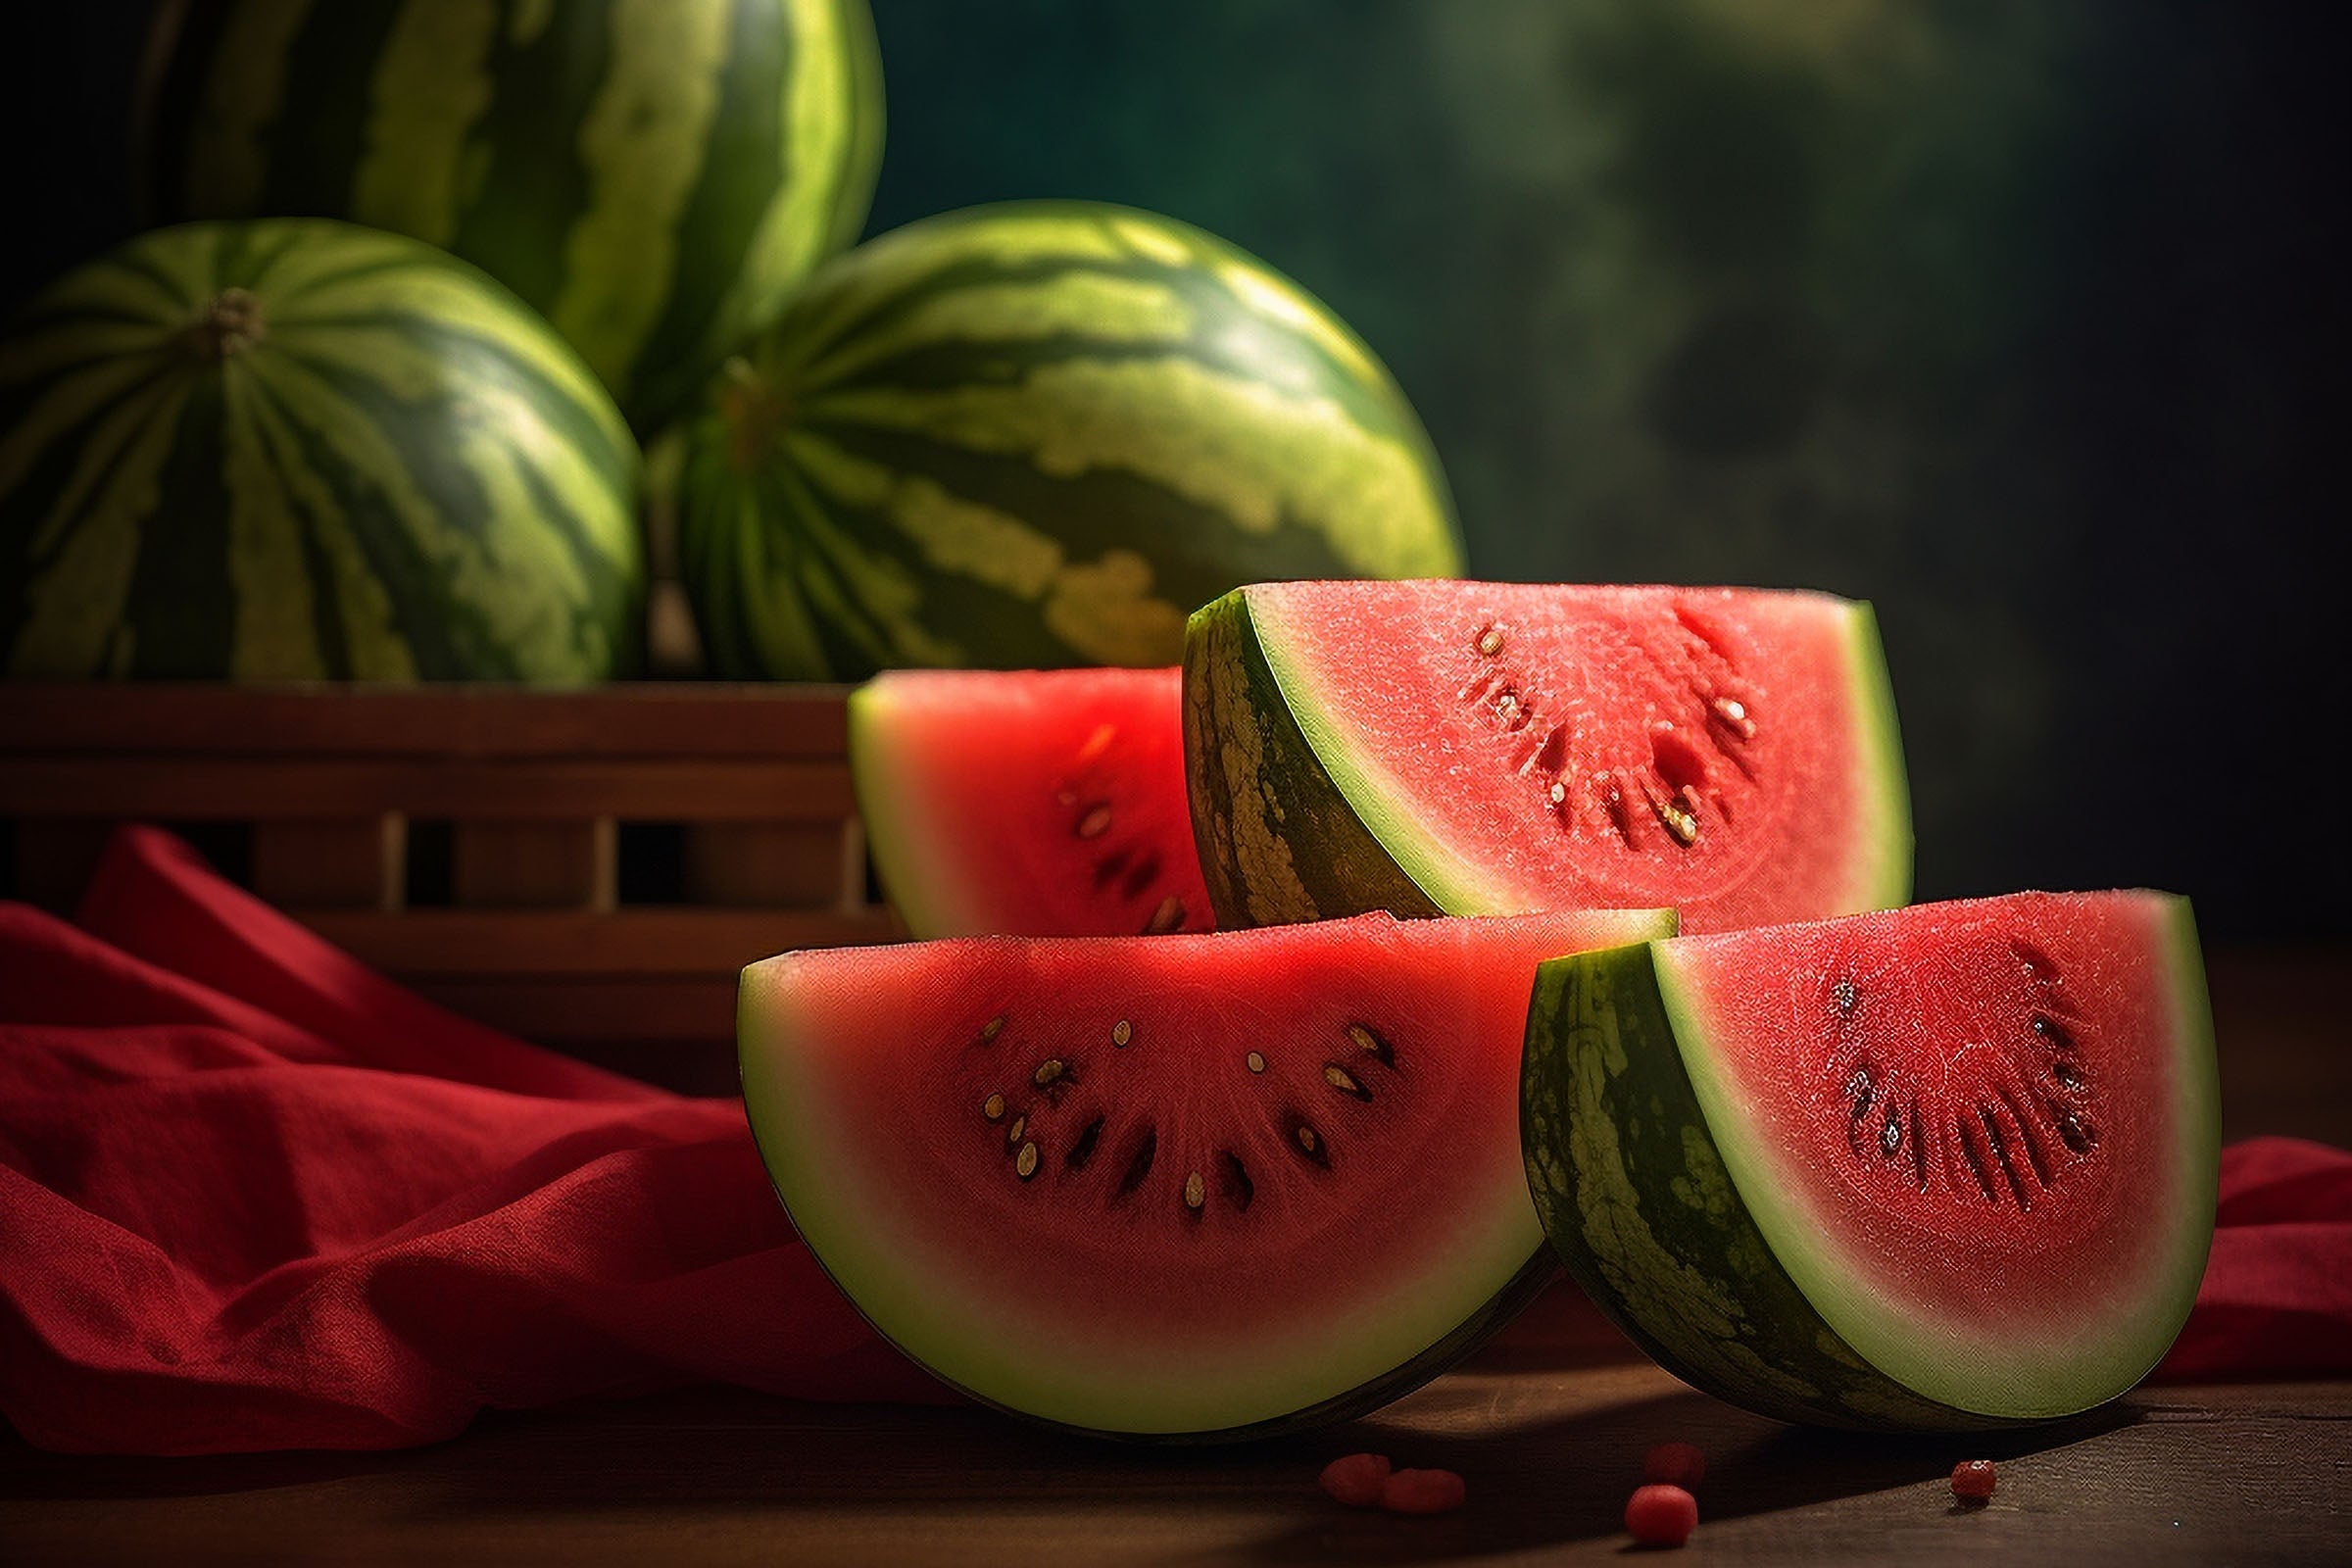 Watermelon Fragrance Oil